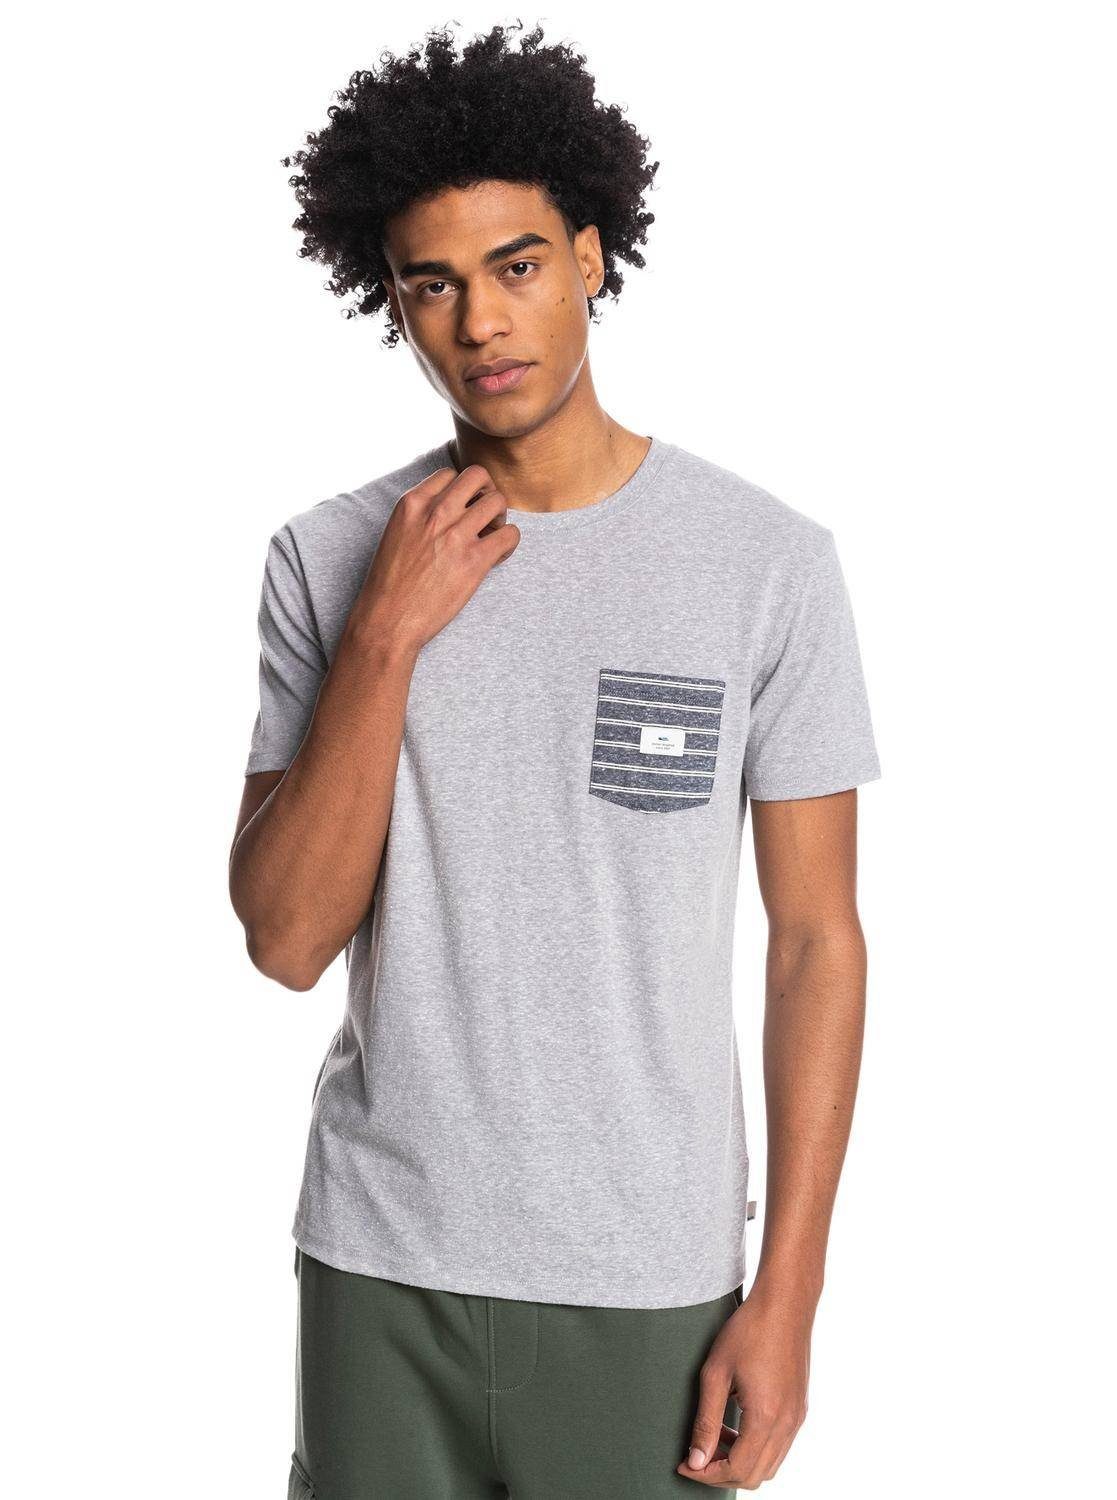 Quiksilver Print-Shirt Retro Plan - Taschen-T-Shirt für Männer